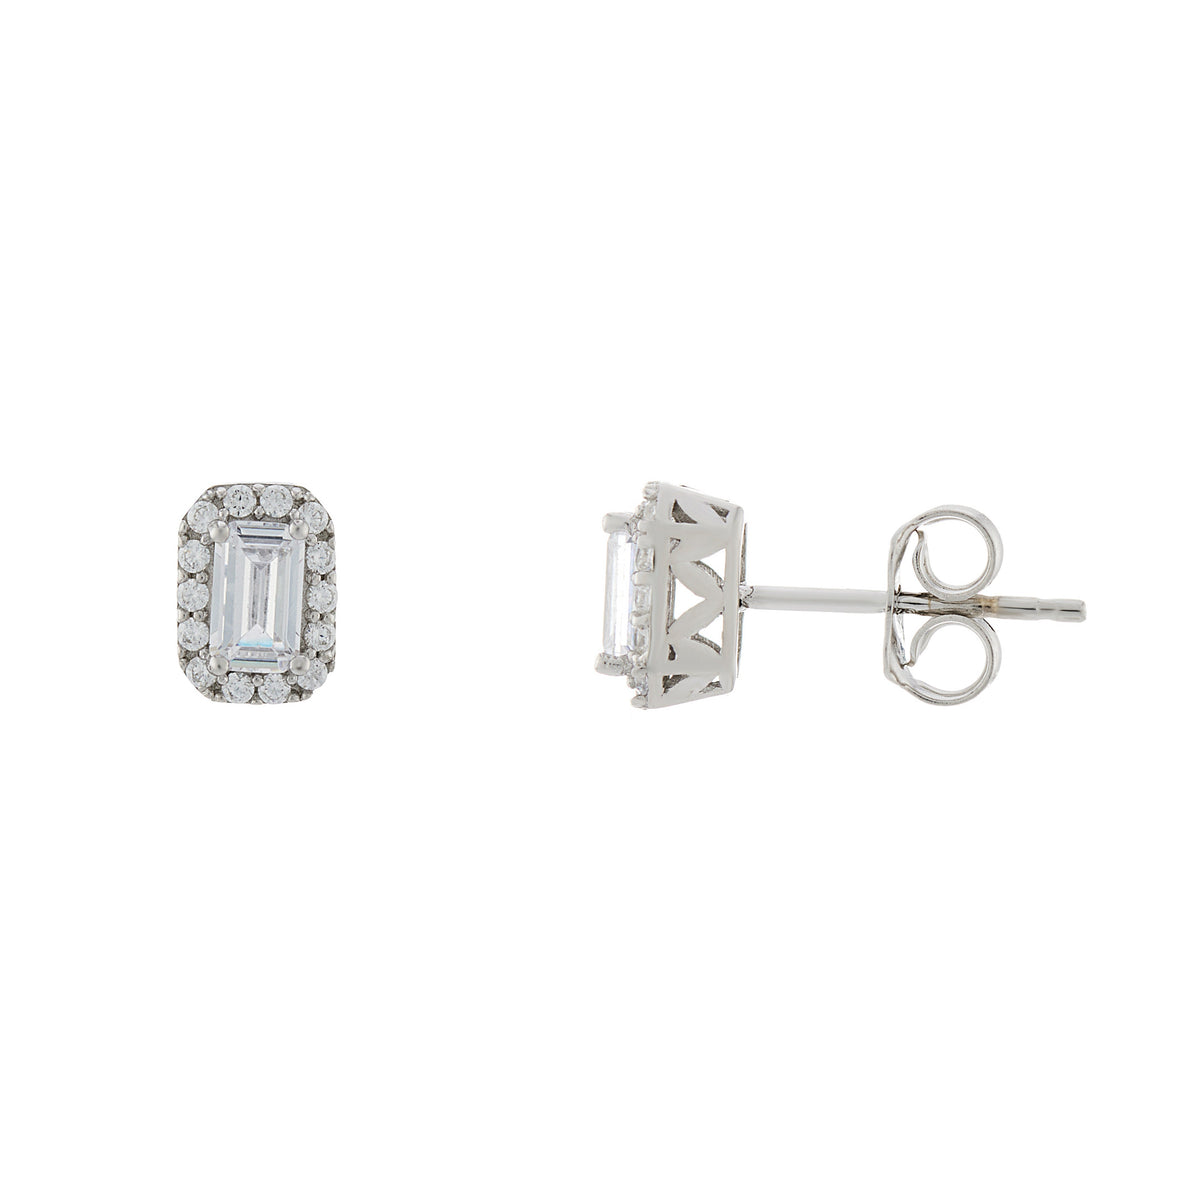 9ct white gold rectangular cz &amp; cz cluster stud earrings